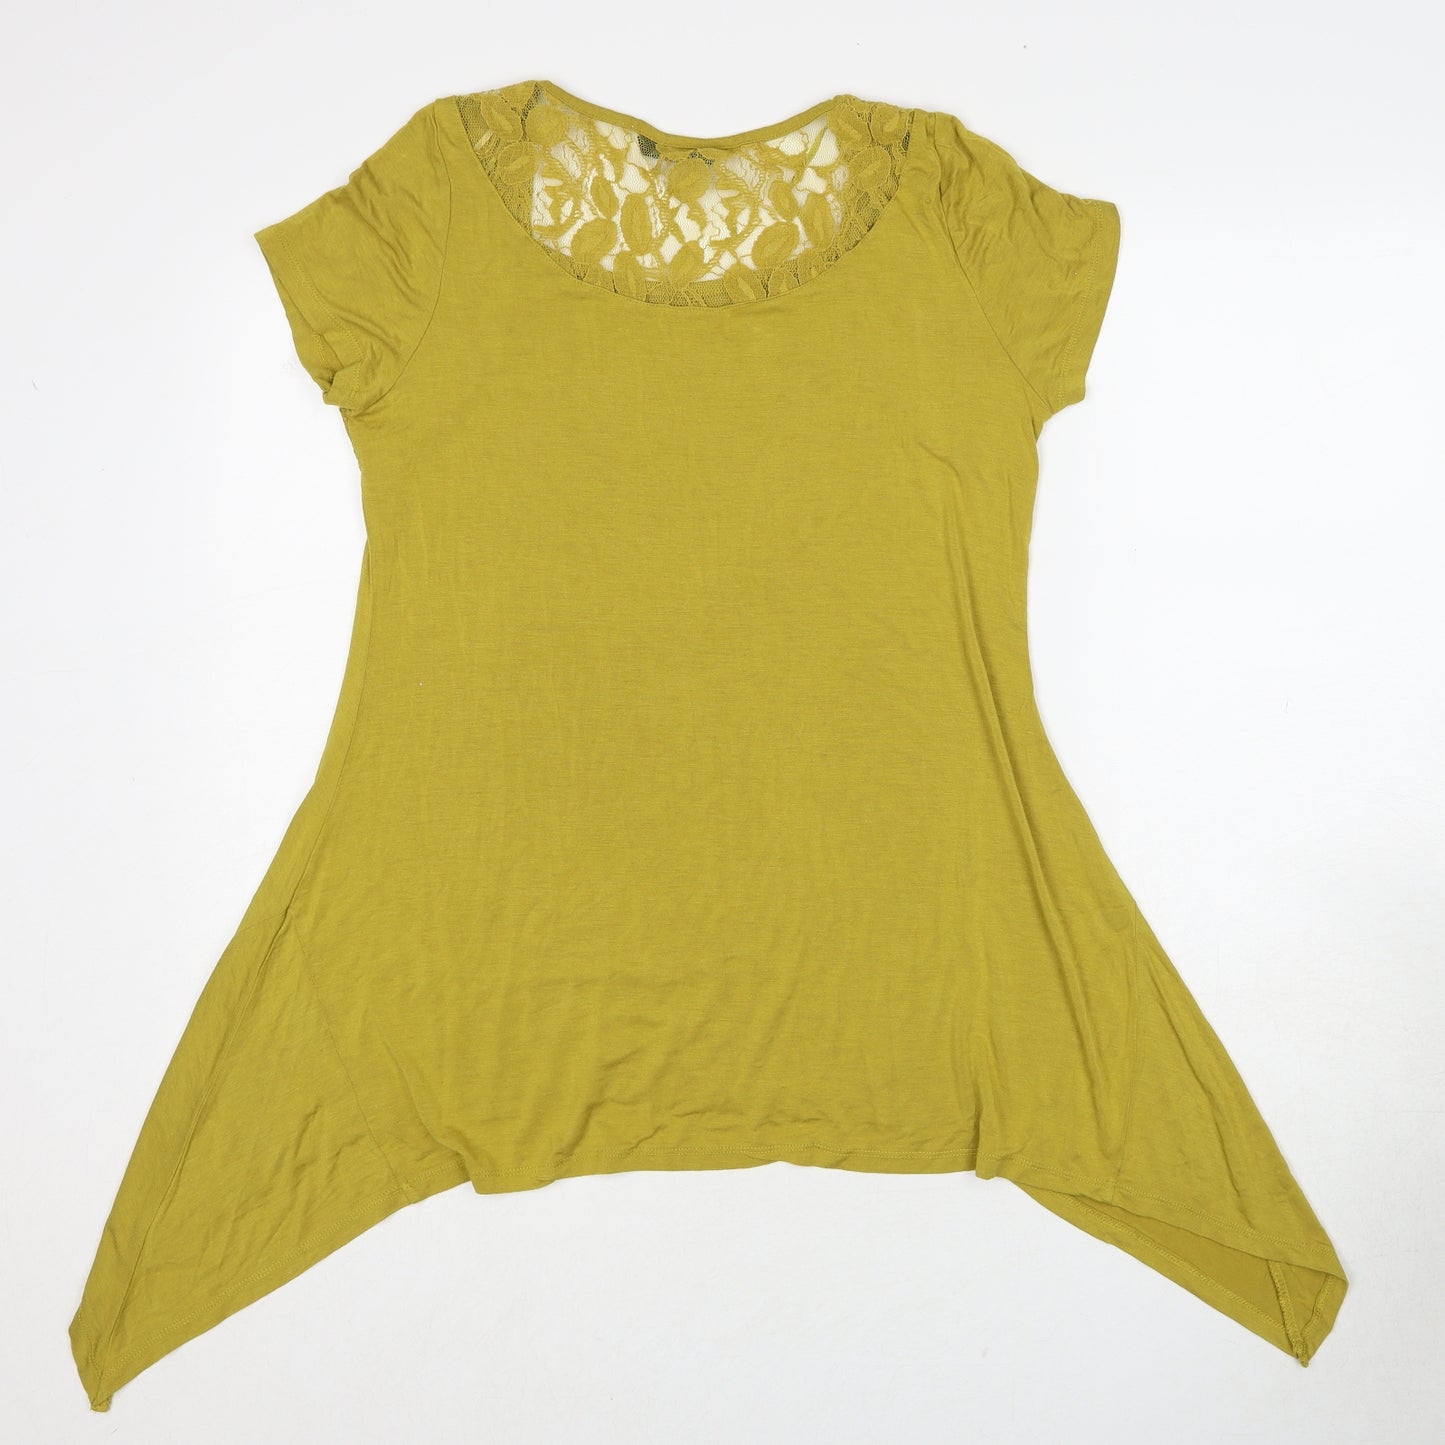 Bonmarché Womens Yellow Cotton Basic T-Shirt Size 14 Scoop Neck - Asymmetric Lace Detail